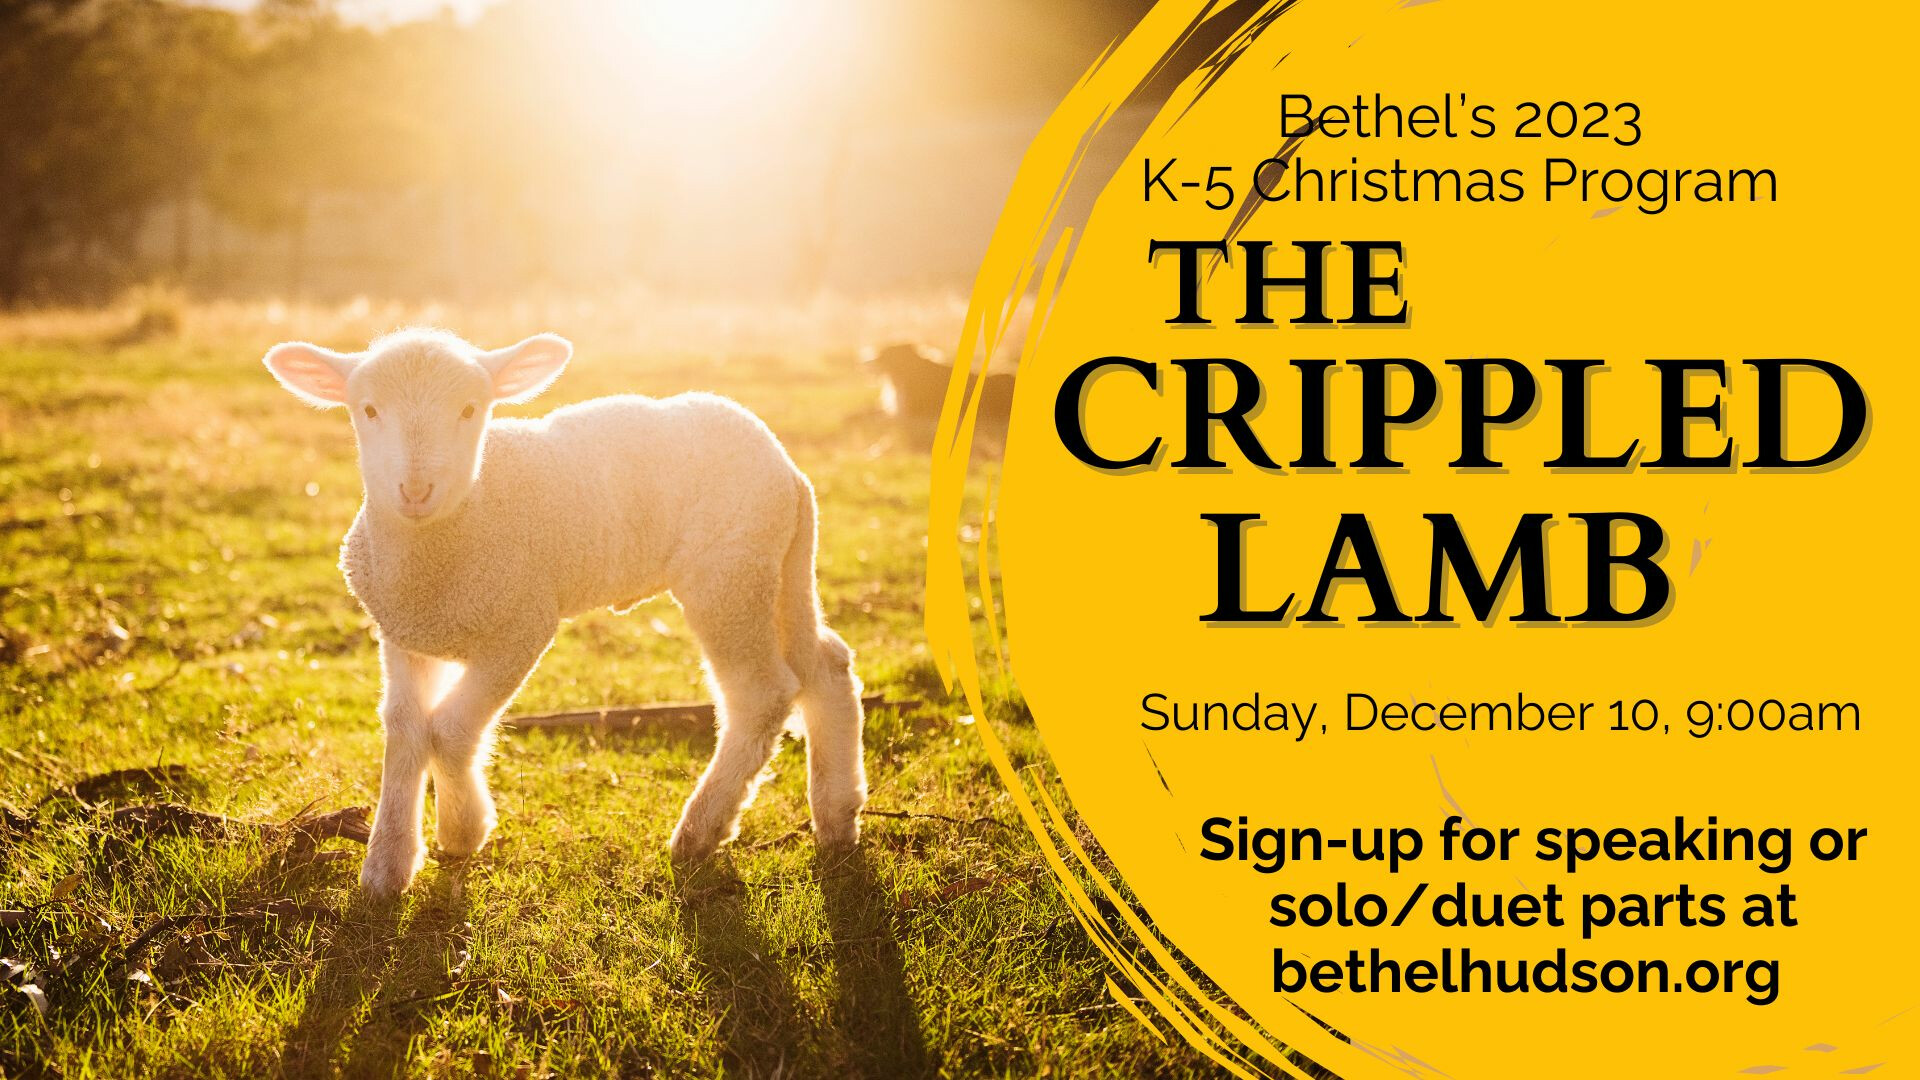 The Crippled Lamb, K-5 Sunday School Program